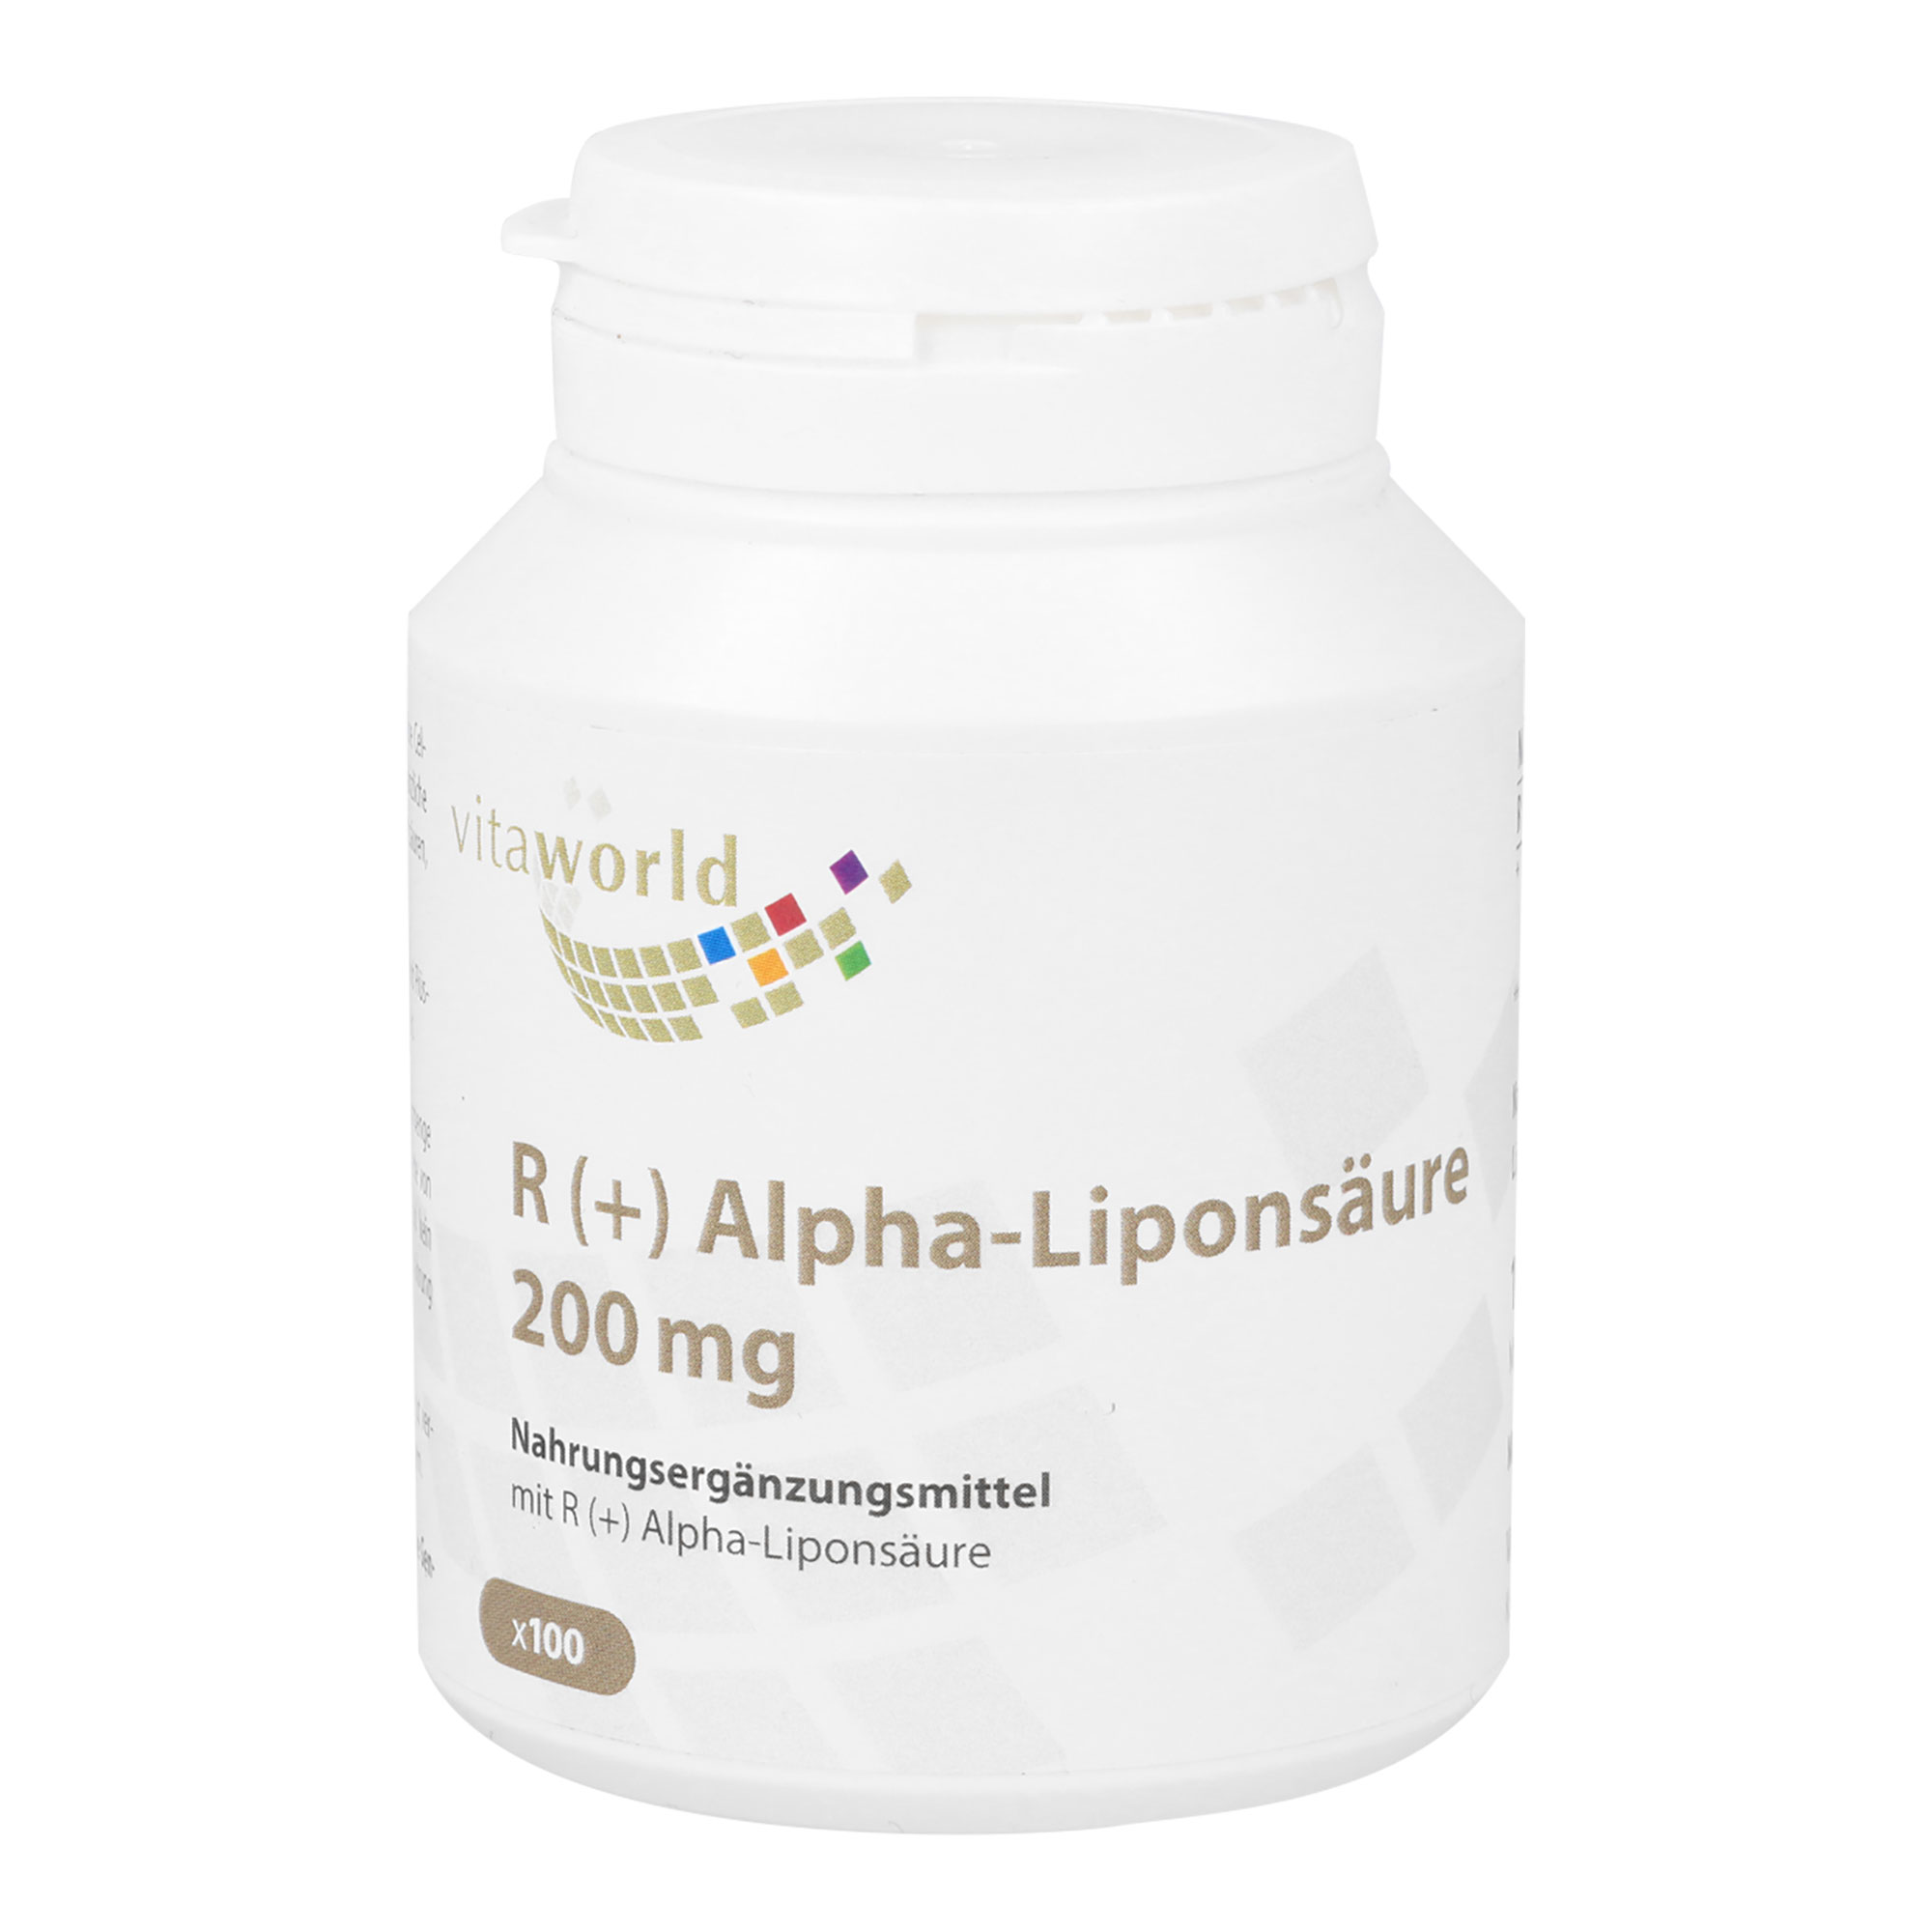 Nahrungsergänzungsmittel mit R (+) Alpha-Liponsäure.